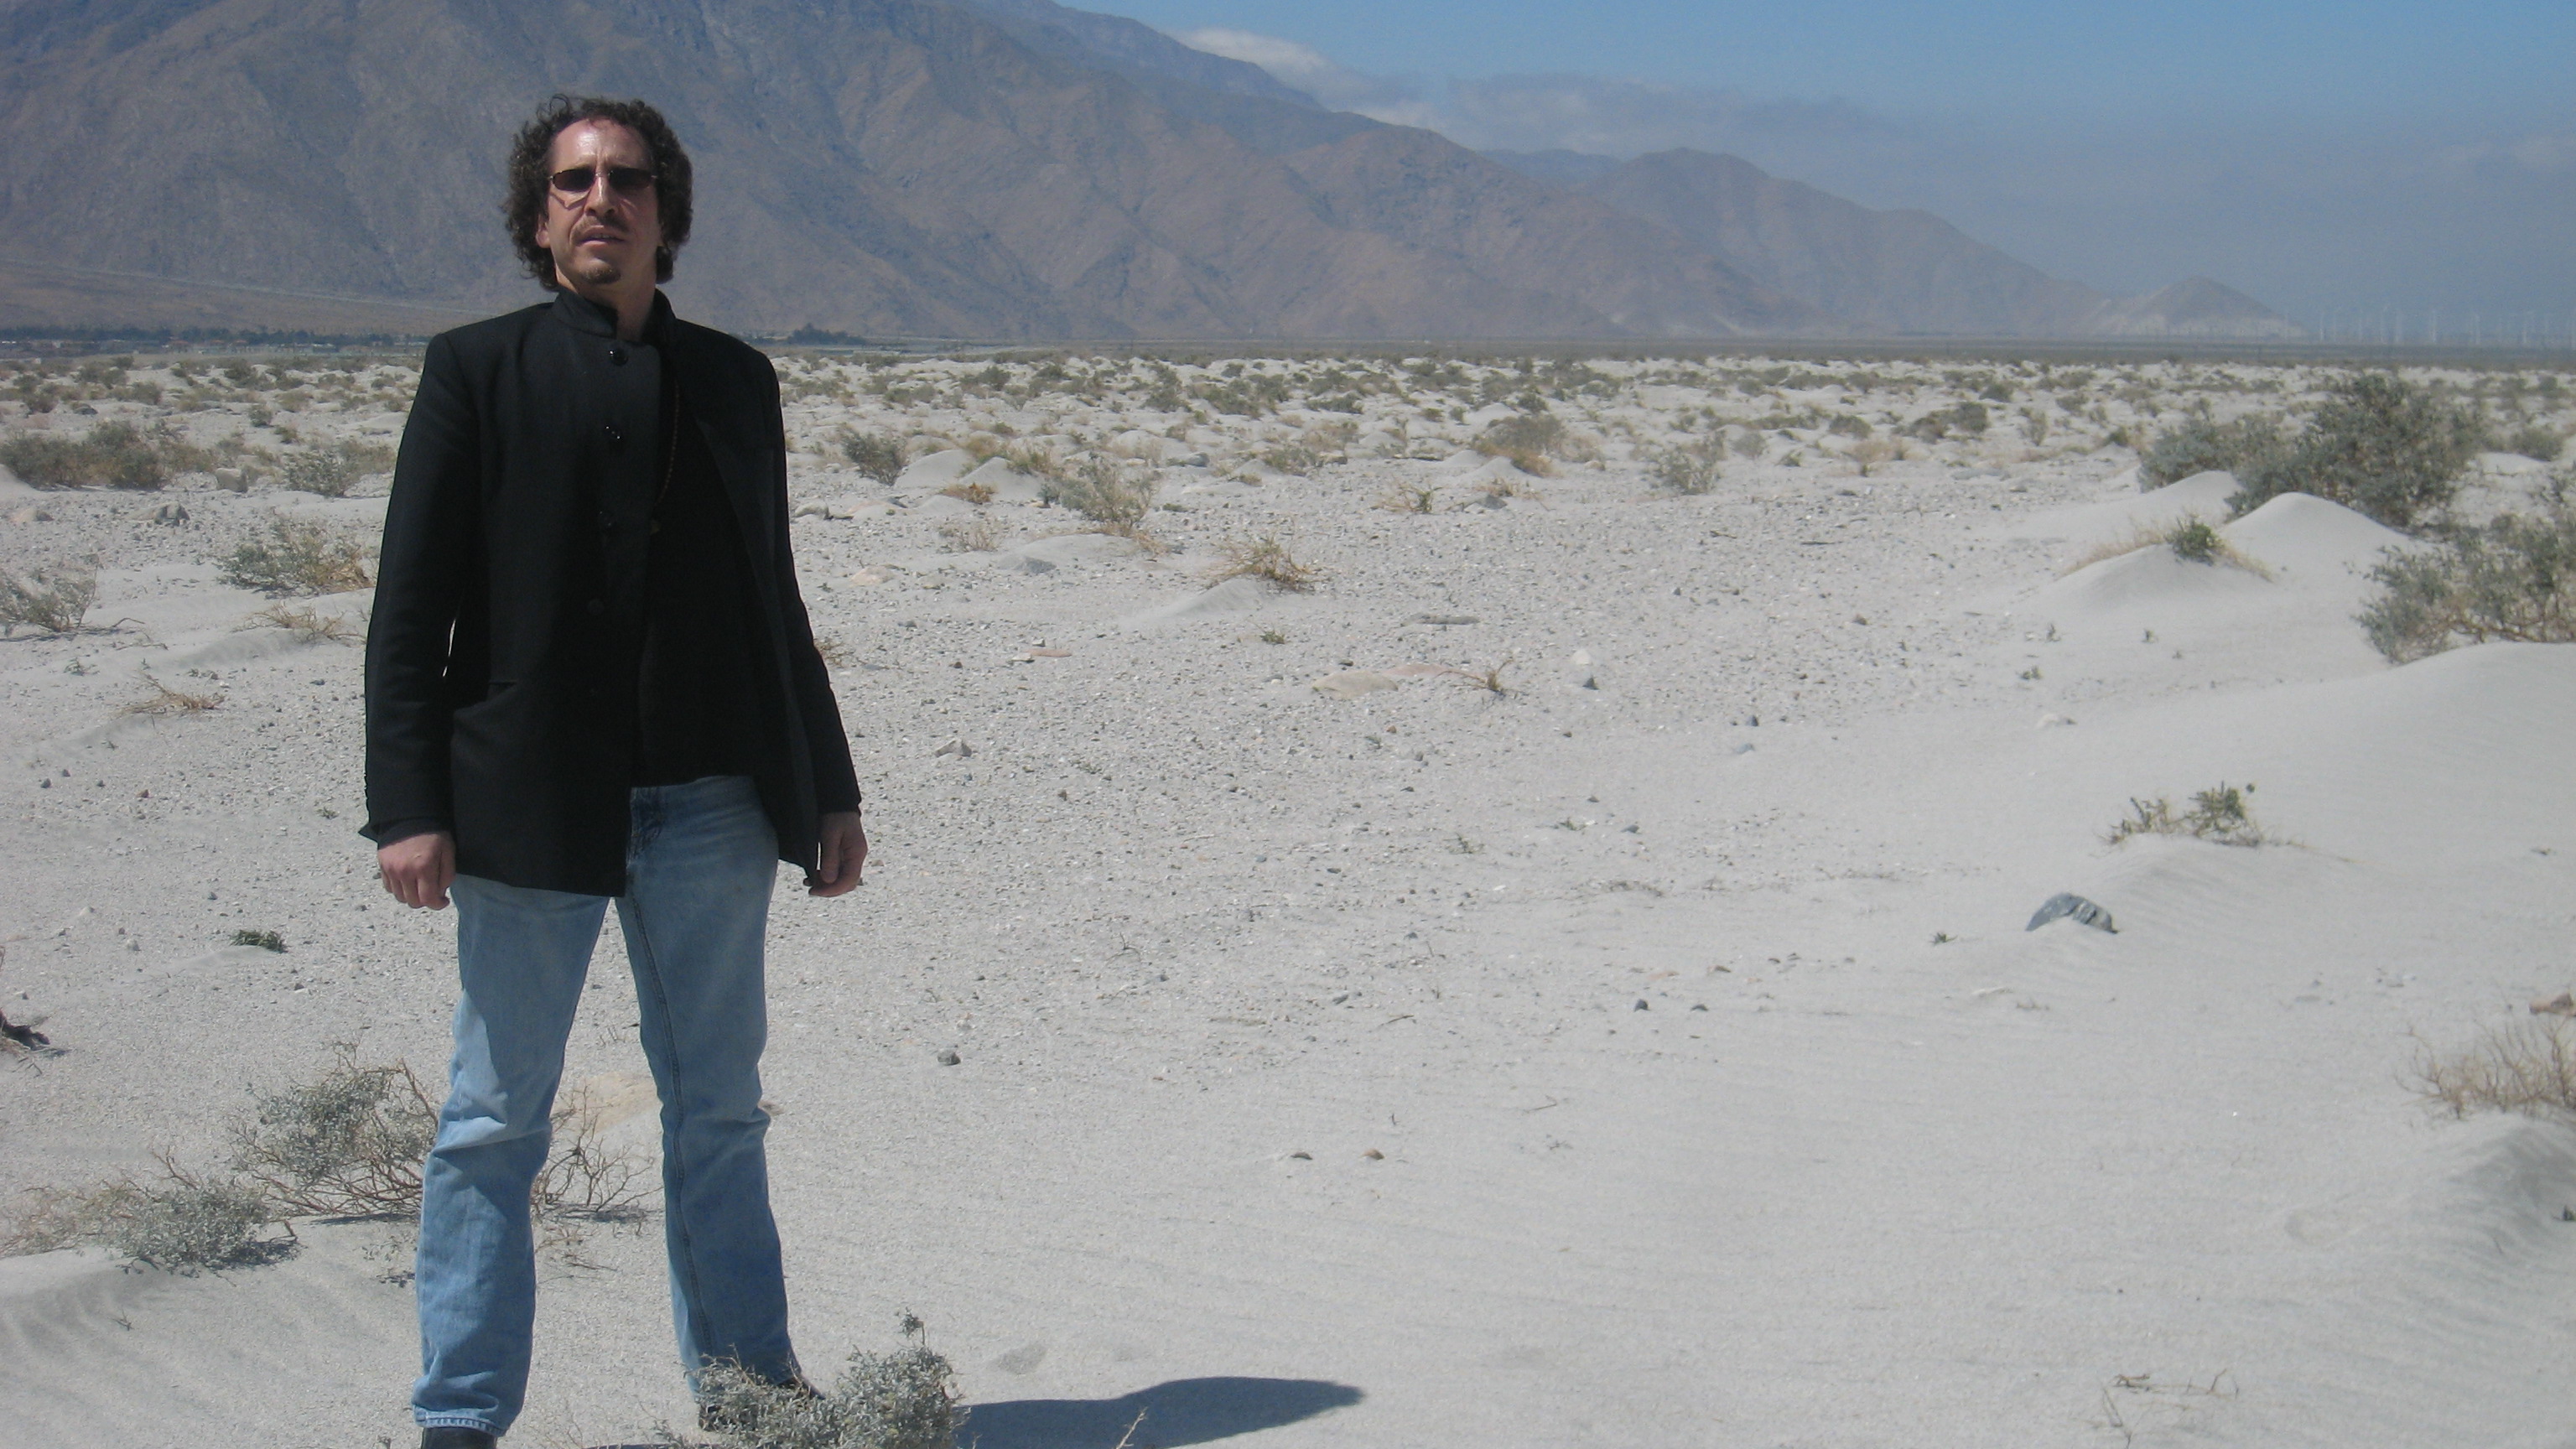 Larry David Eudene, the younger, funnier Larry David alone in the desert.